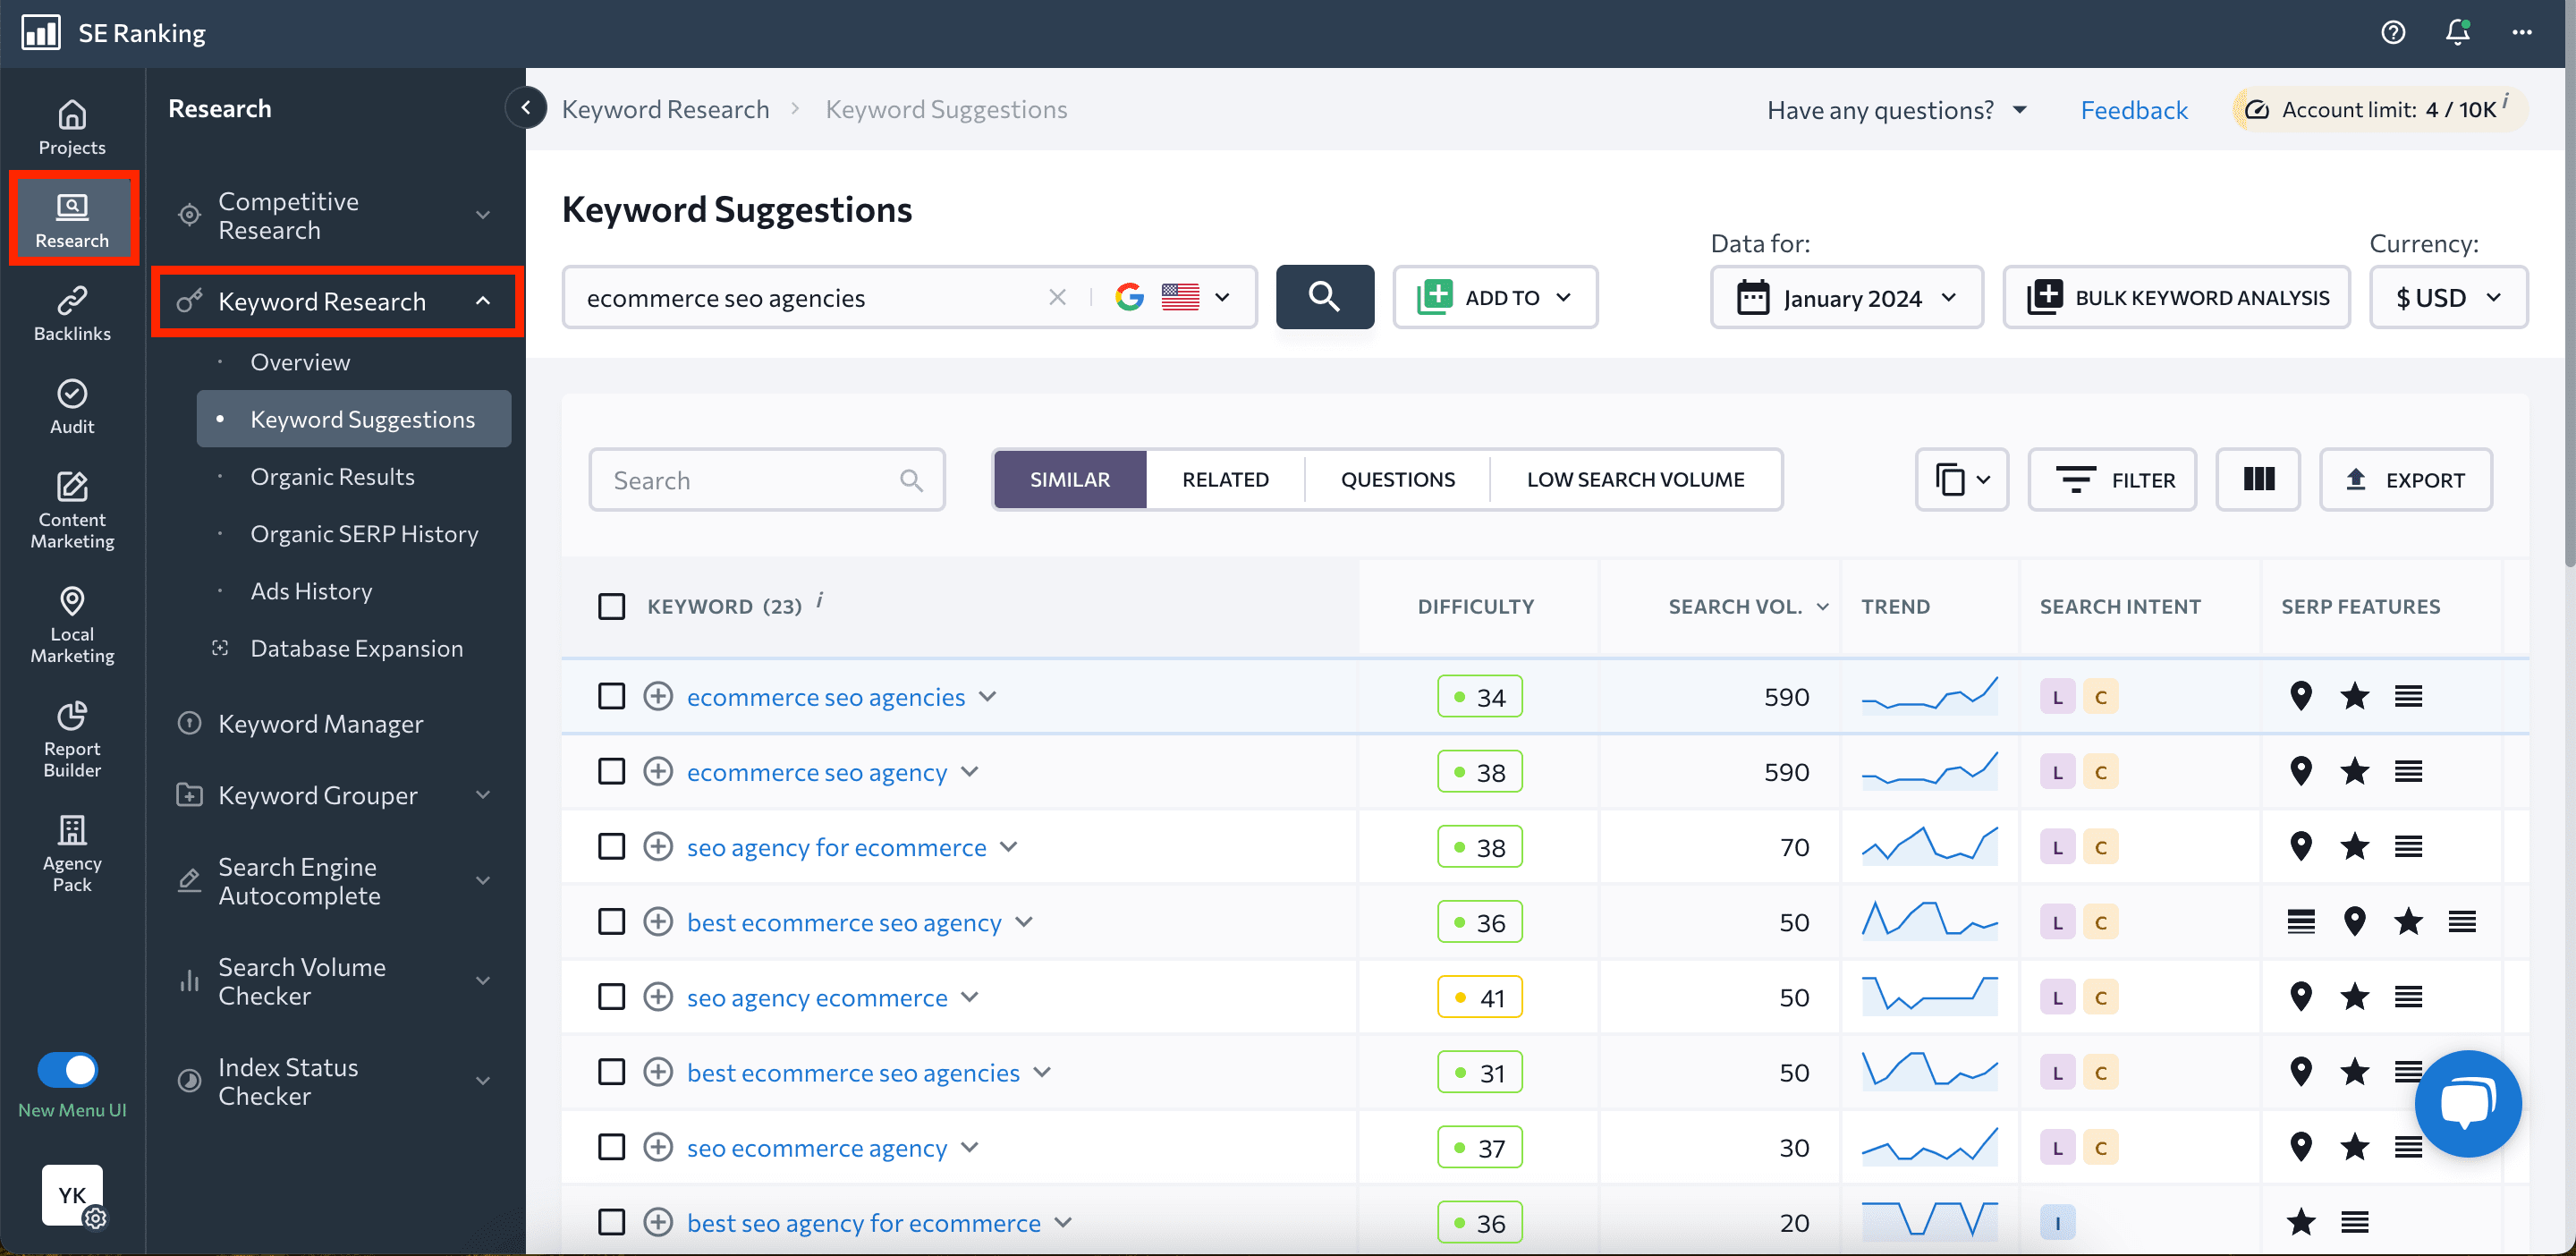 SE Ranking's Keyword Research Tool